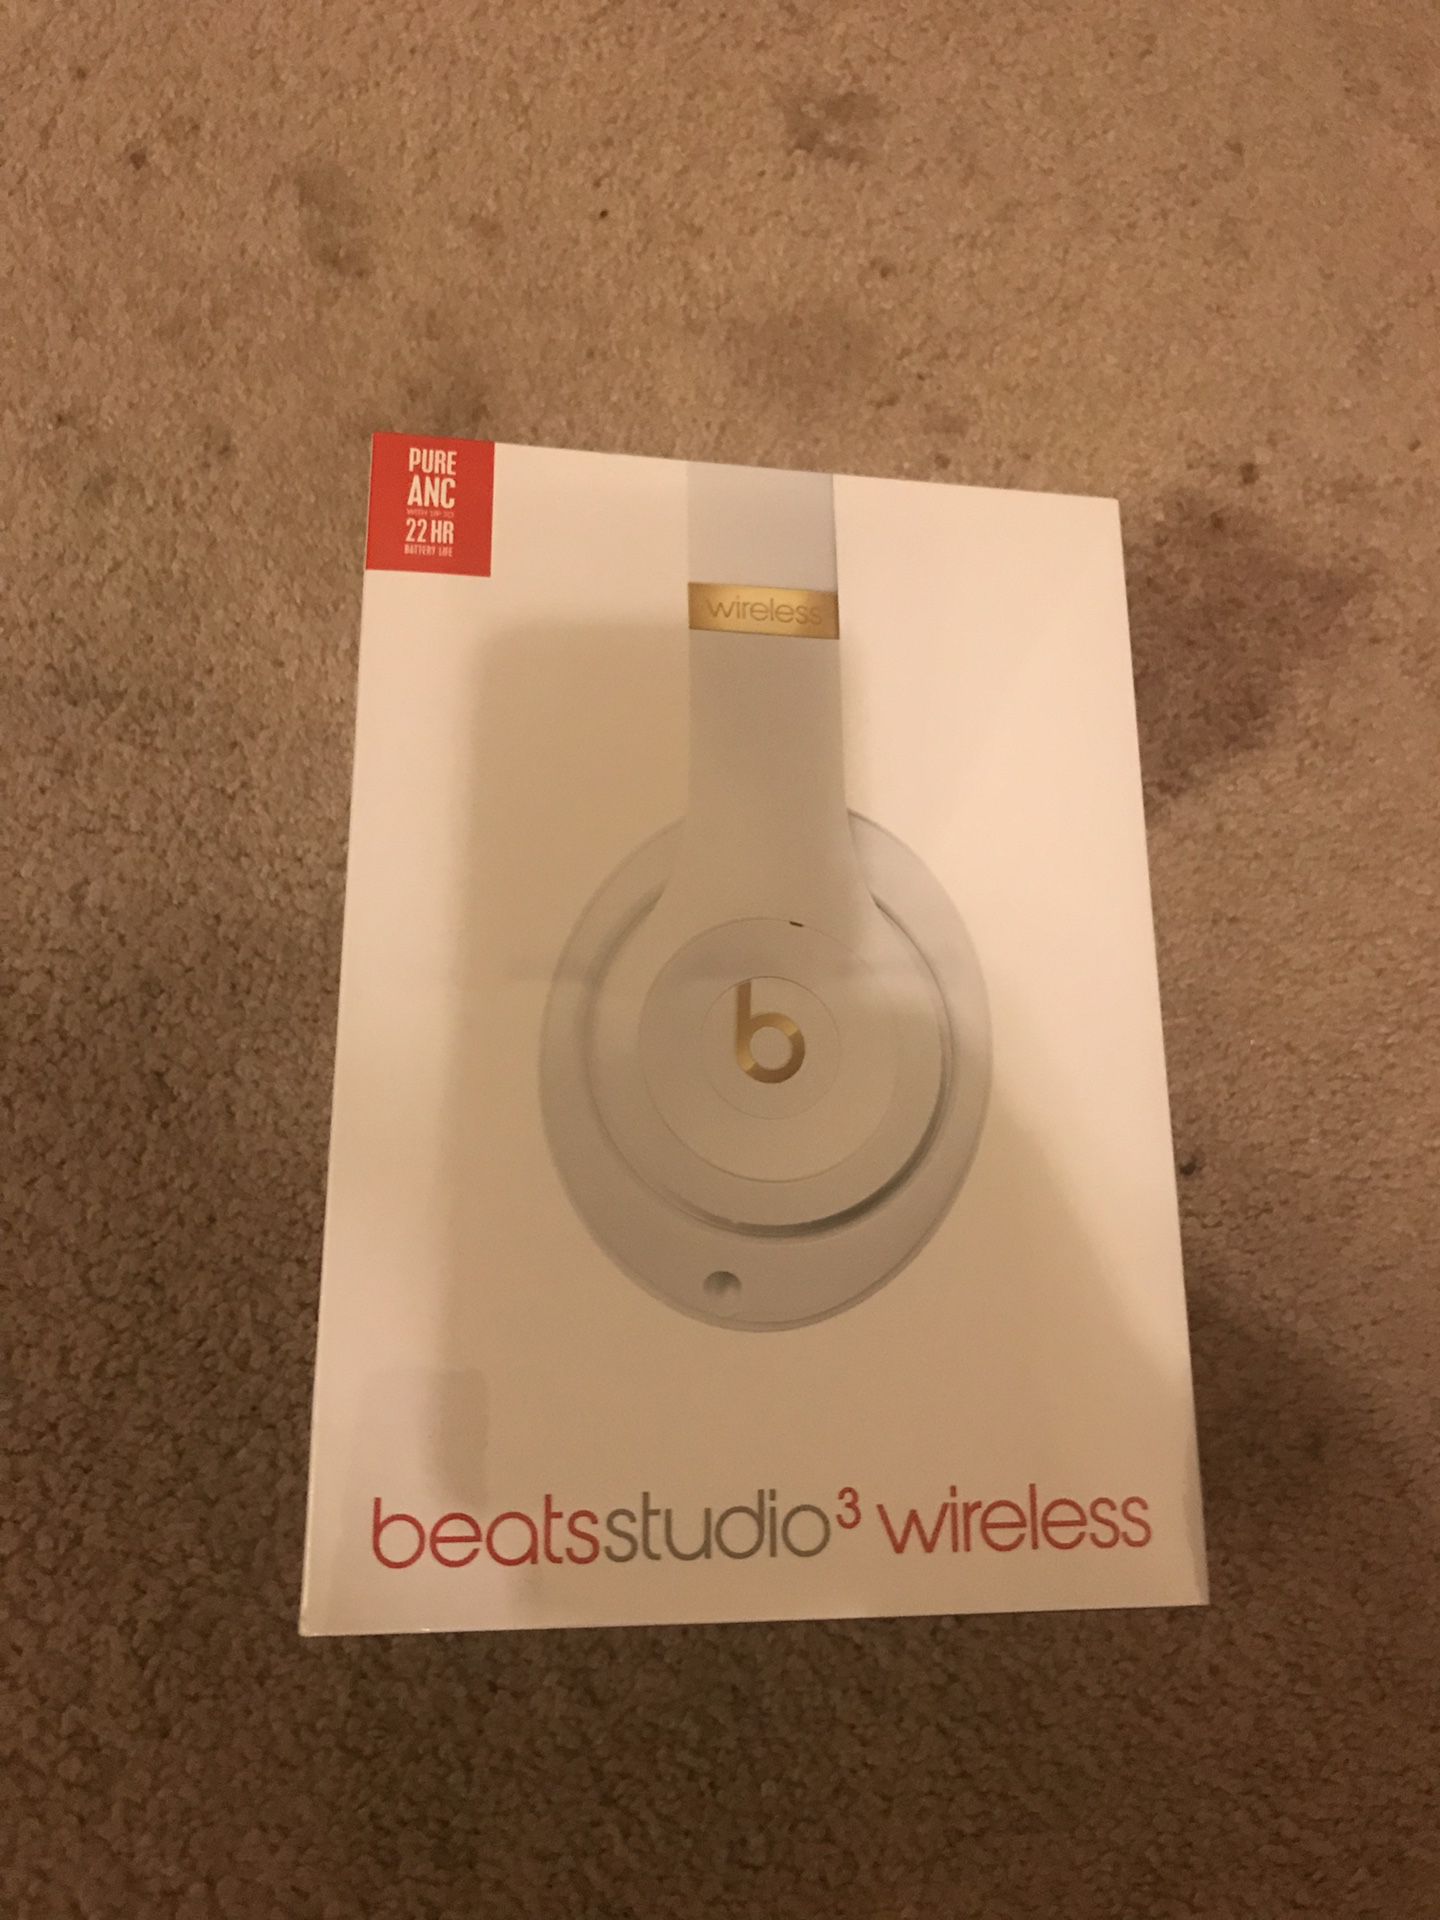 Beatsstudio wireless